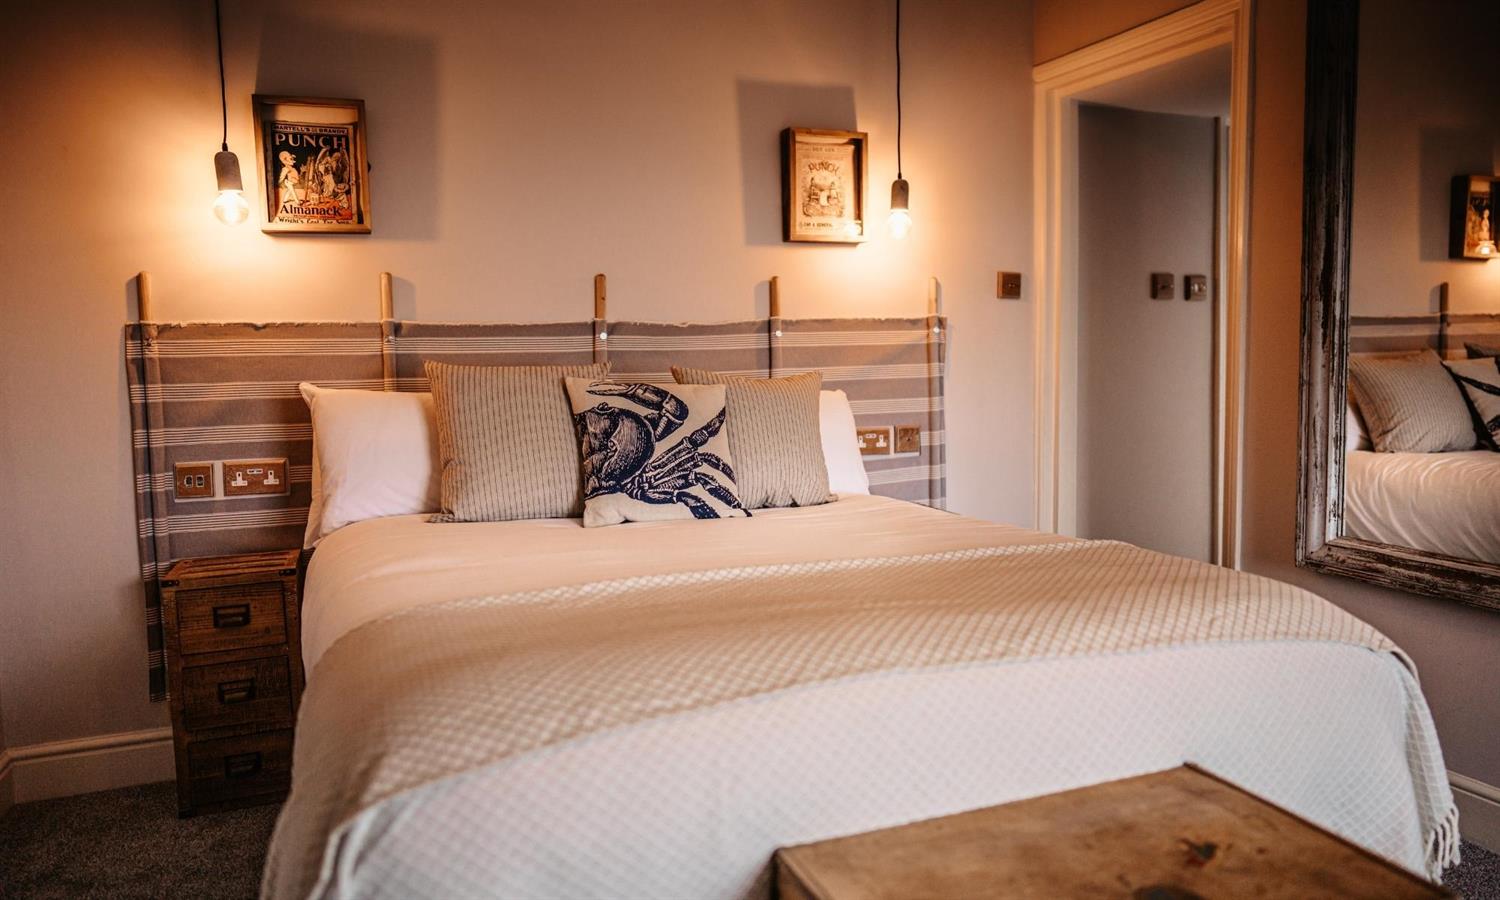 Double bedroom at Ship Inn hotel with cushions and windbreaker headboard